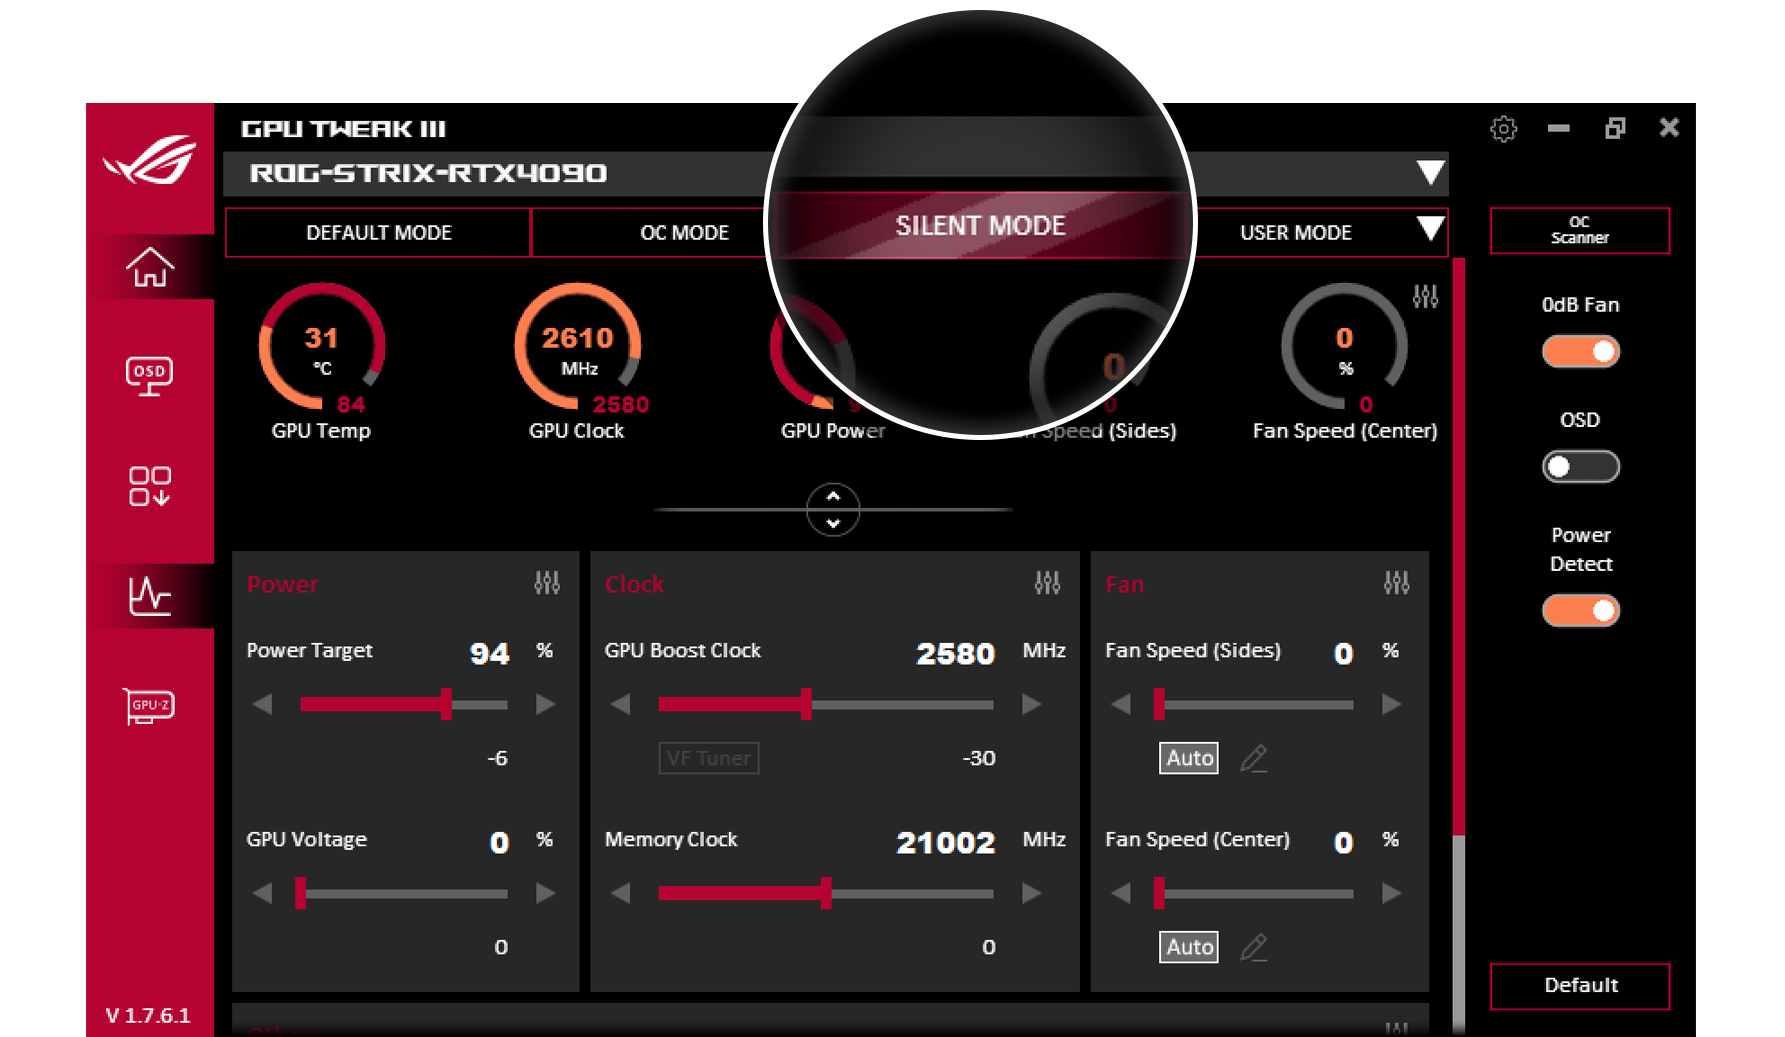 ASUS GPU Tweak III overclock Silent mode interface